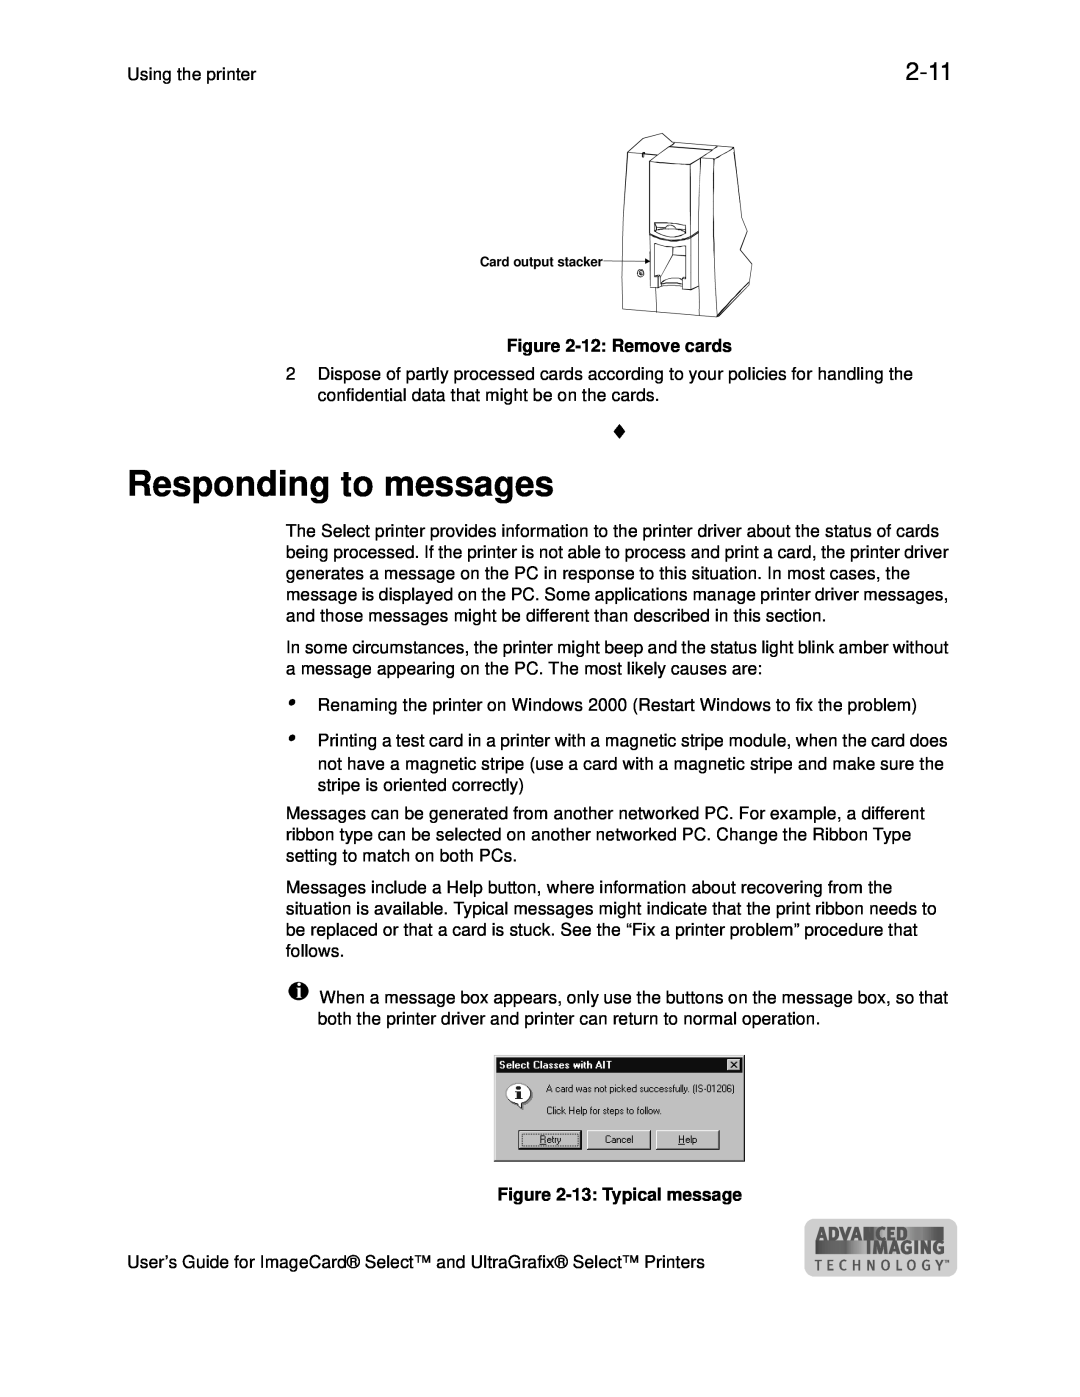 Datacard Group ImageCard SelectTM and UltraGrafix SelectTM Printers manual Responding to messages, 2-11, 12 Remove cards 